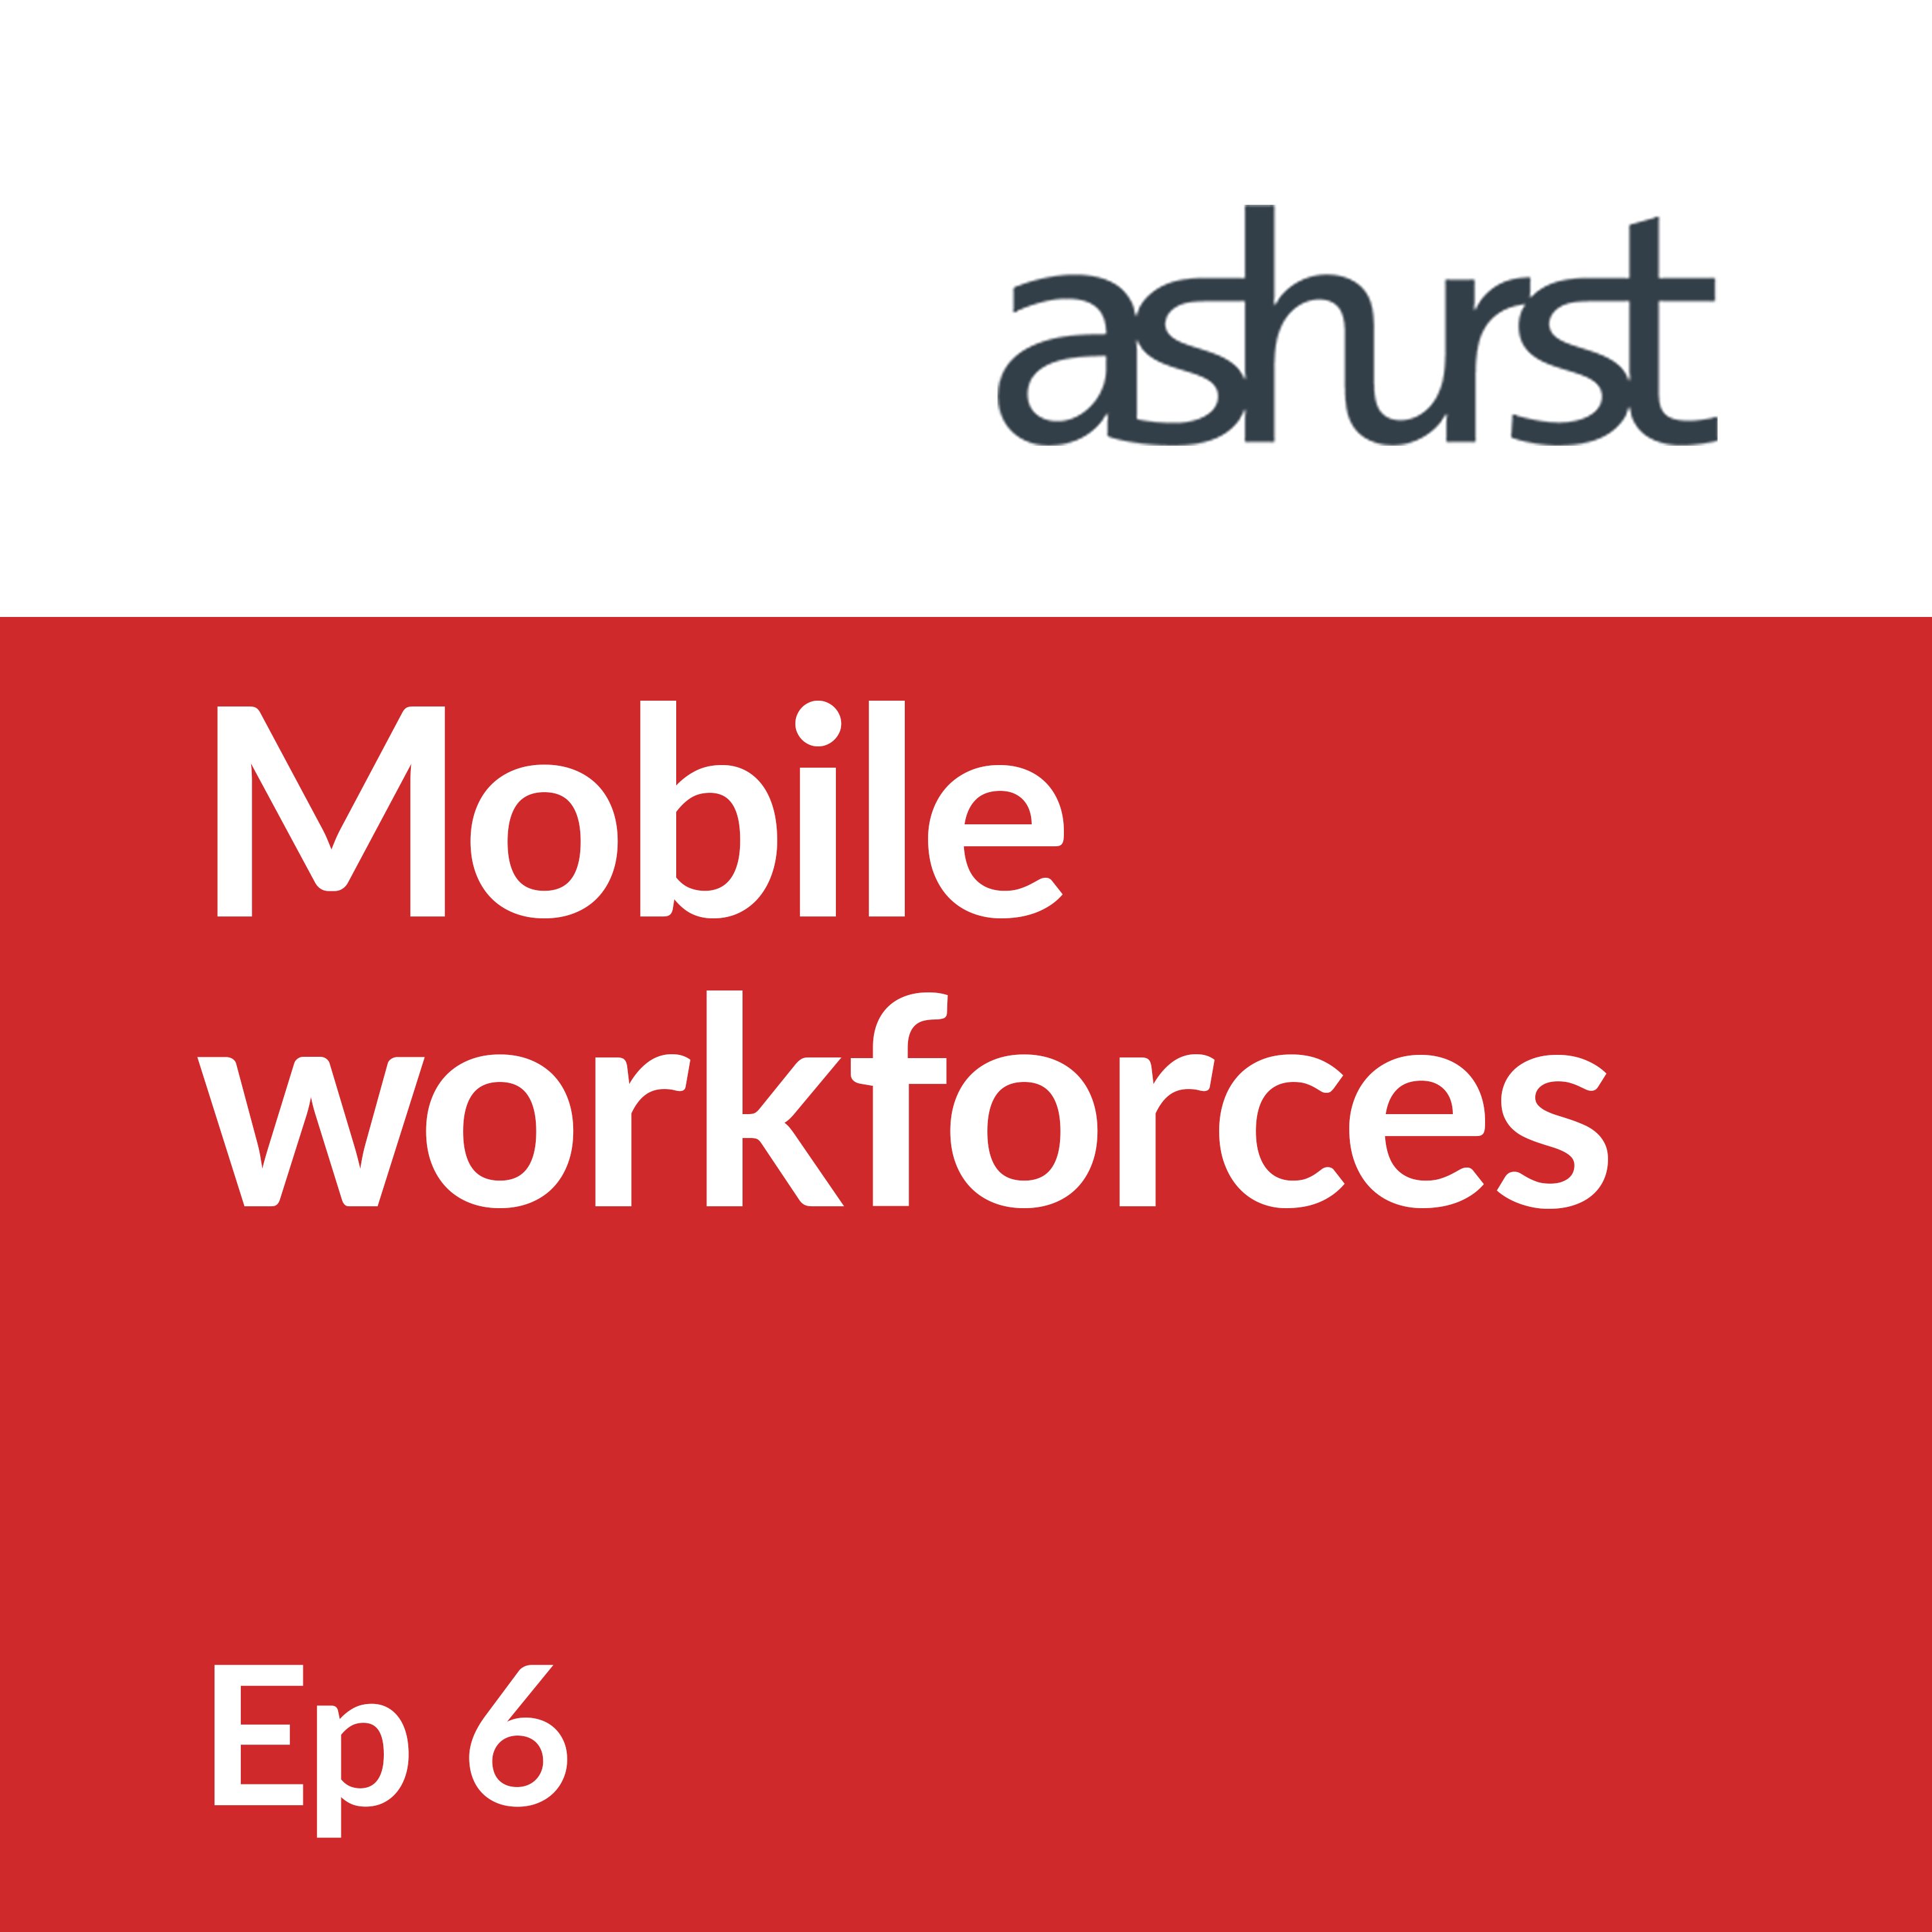 Mobile workforces